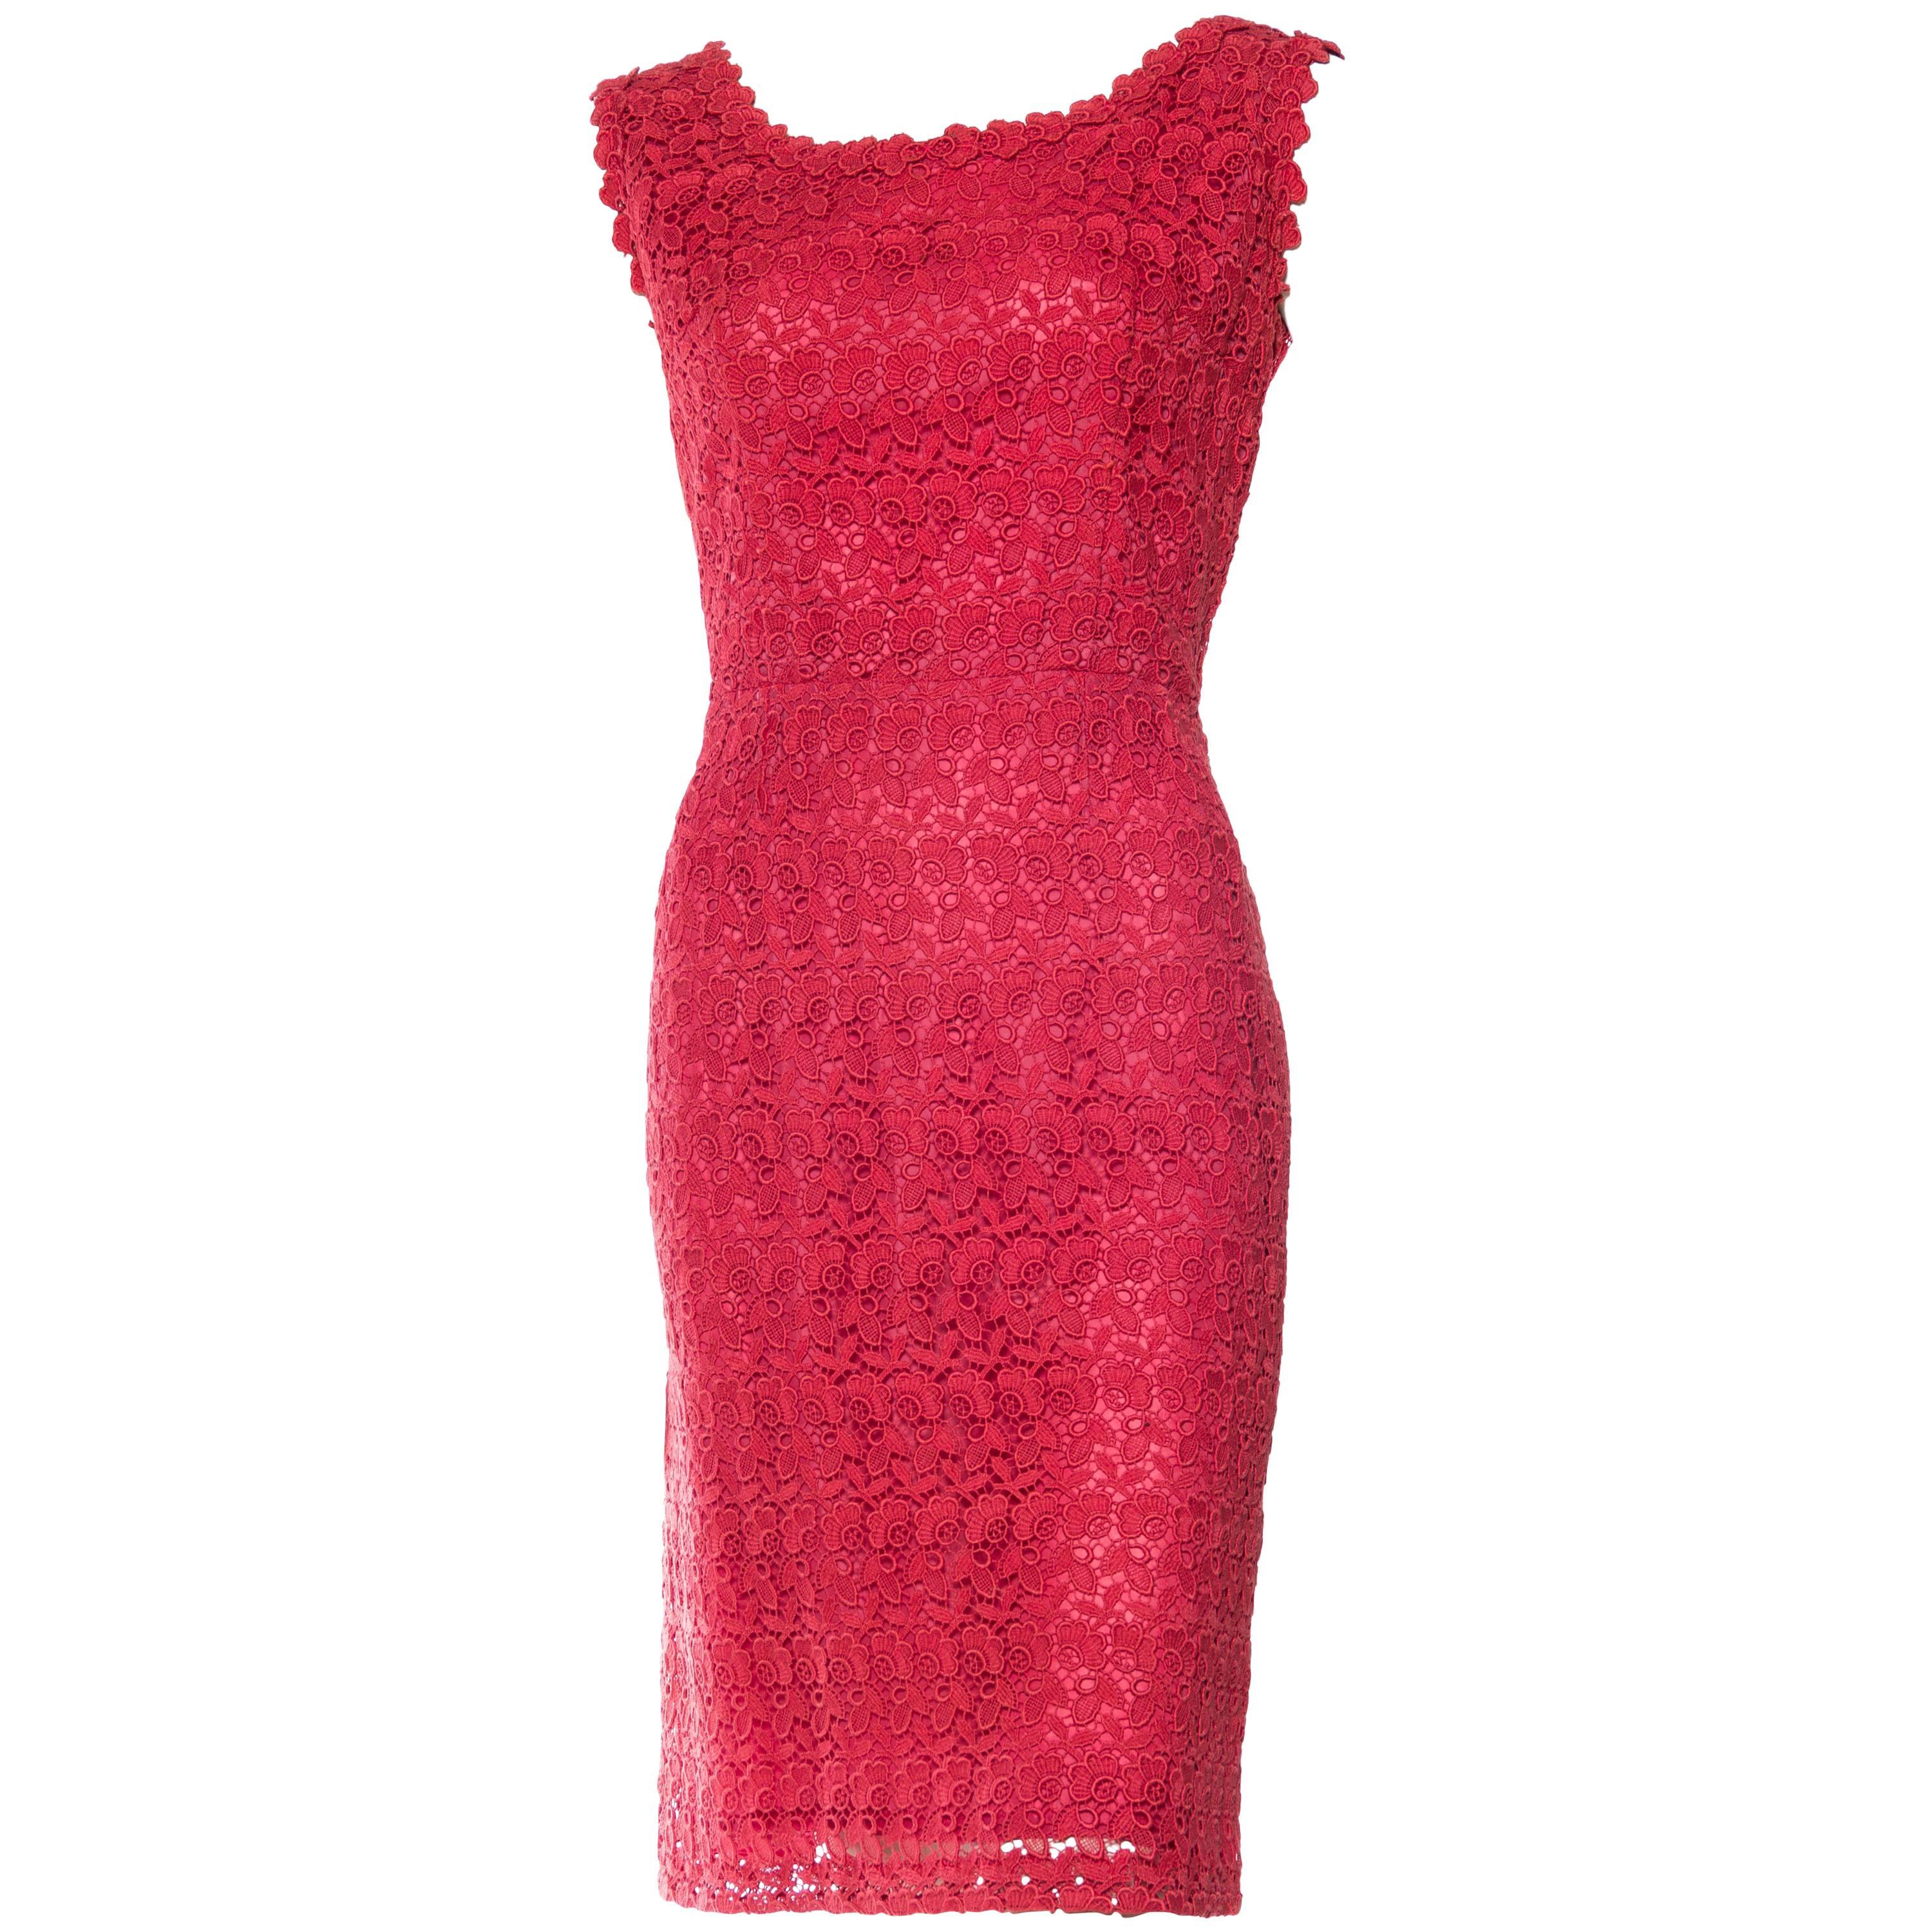 Beautiful 1950s Red Lace Dress